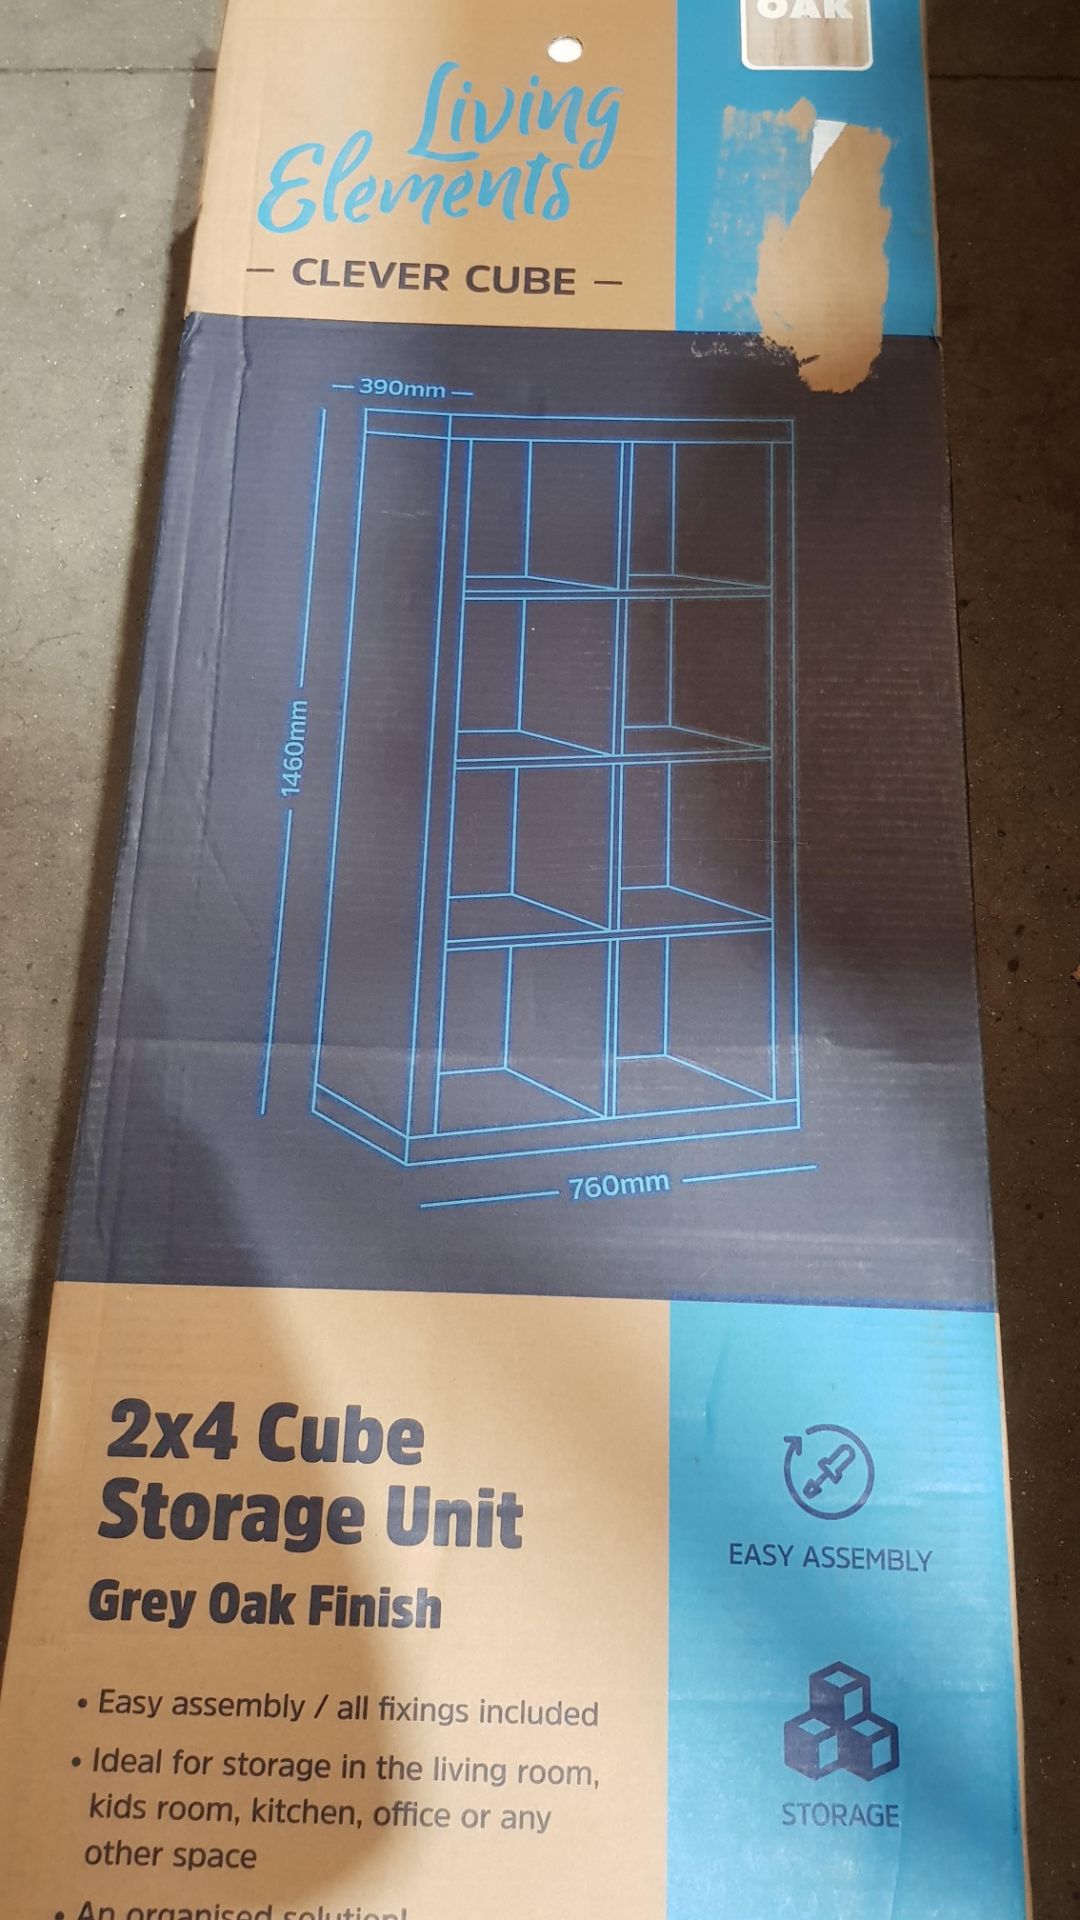 (R2L) 1 X Living Elements Clever Cube 2x4 Cube Storage Unit Oak Finish. (H1460 x W760 x D390mm) - Image 2 of 2